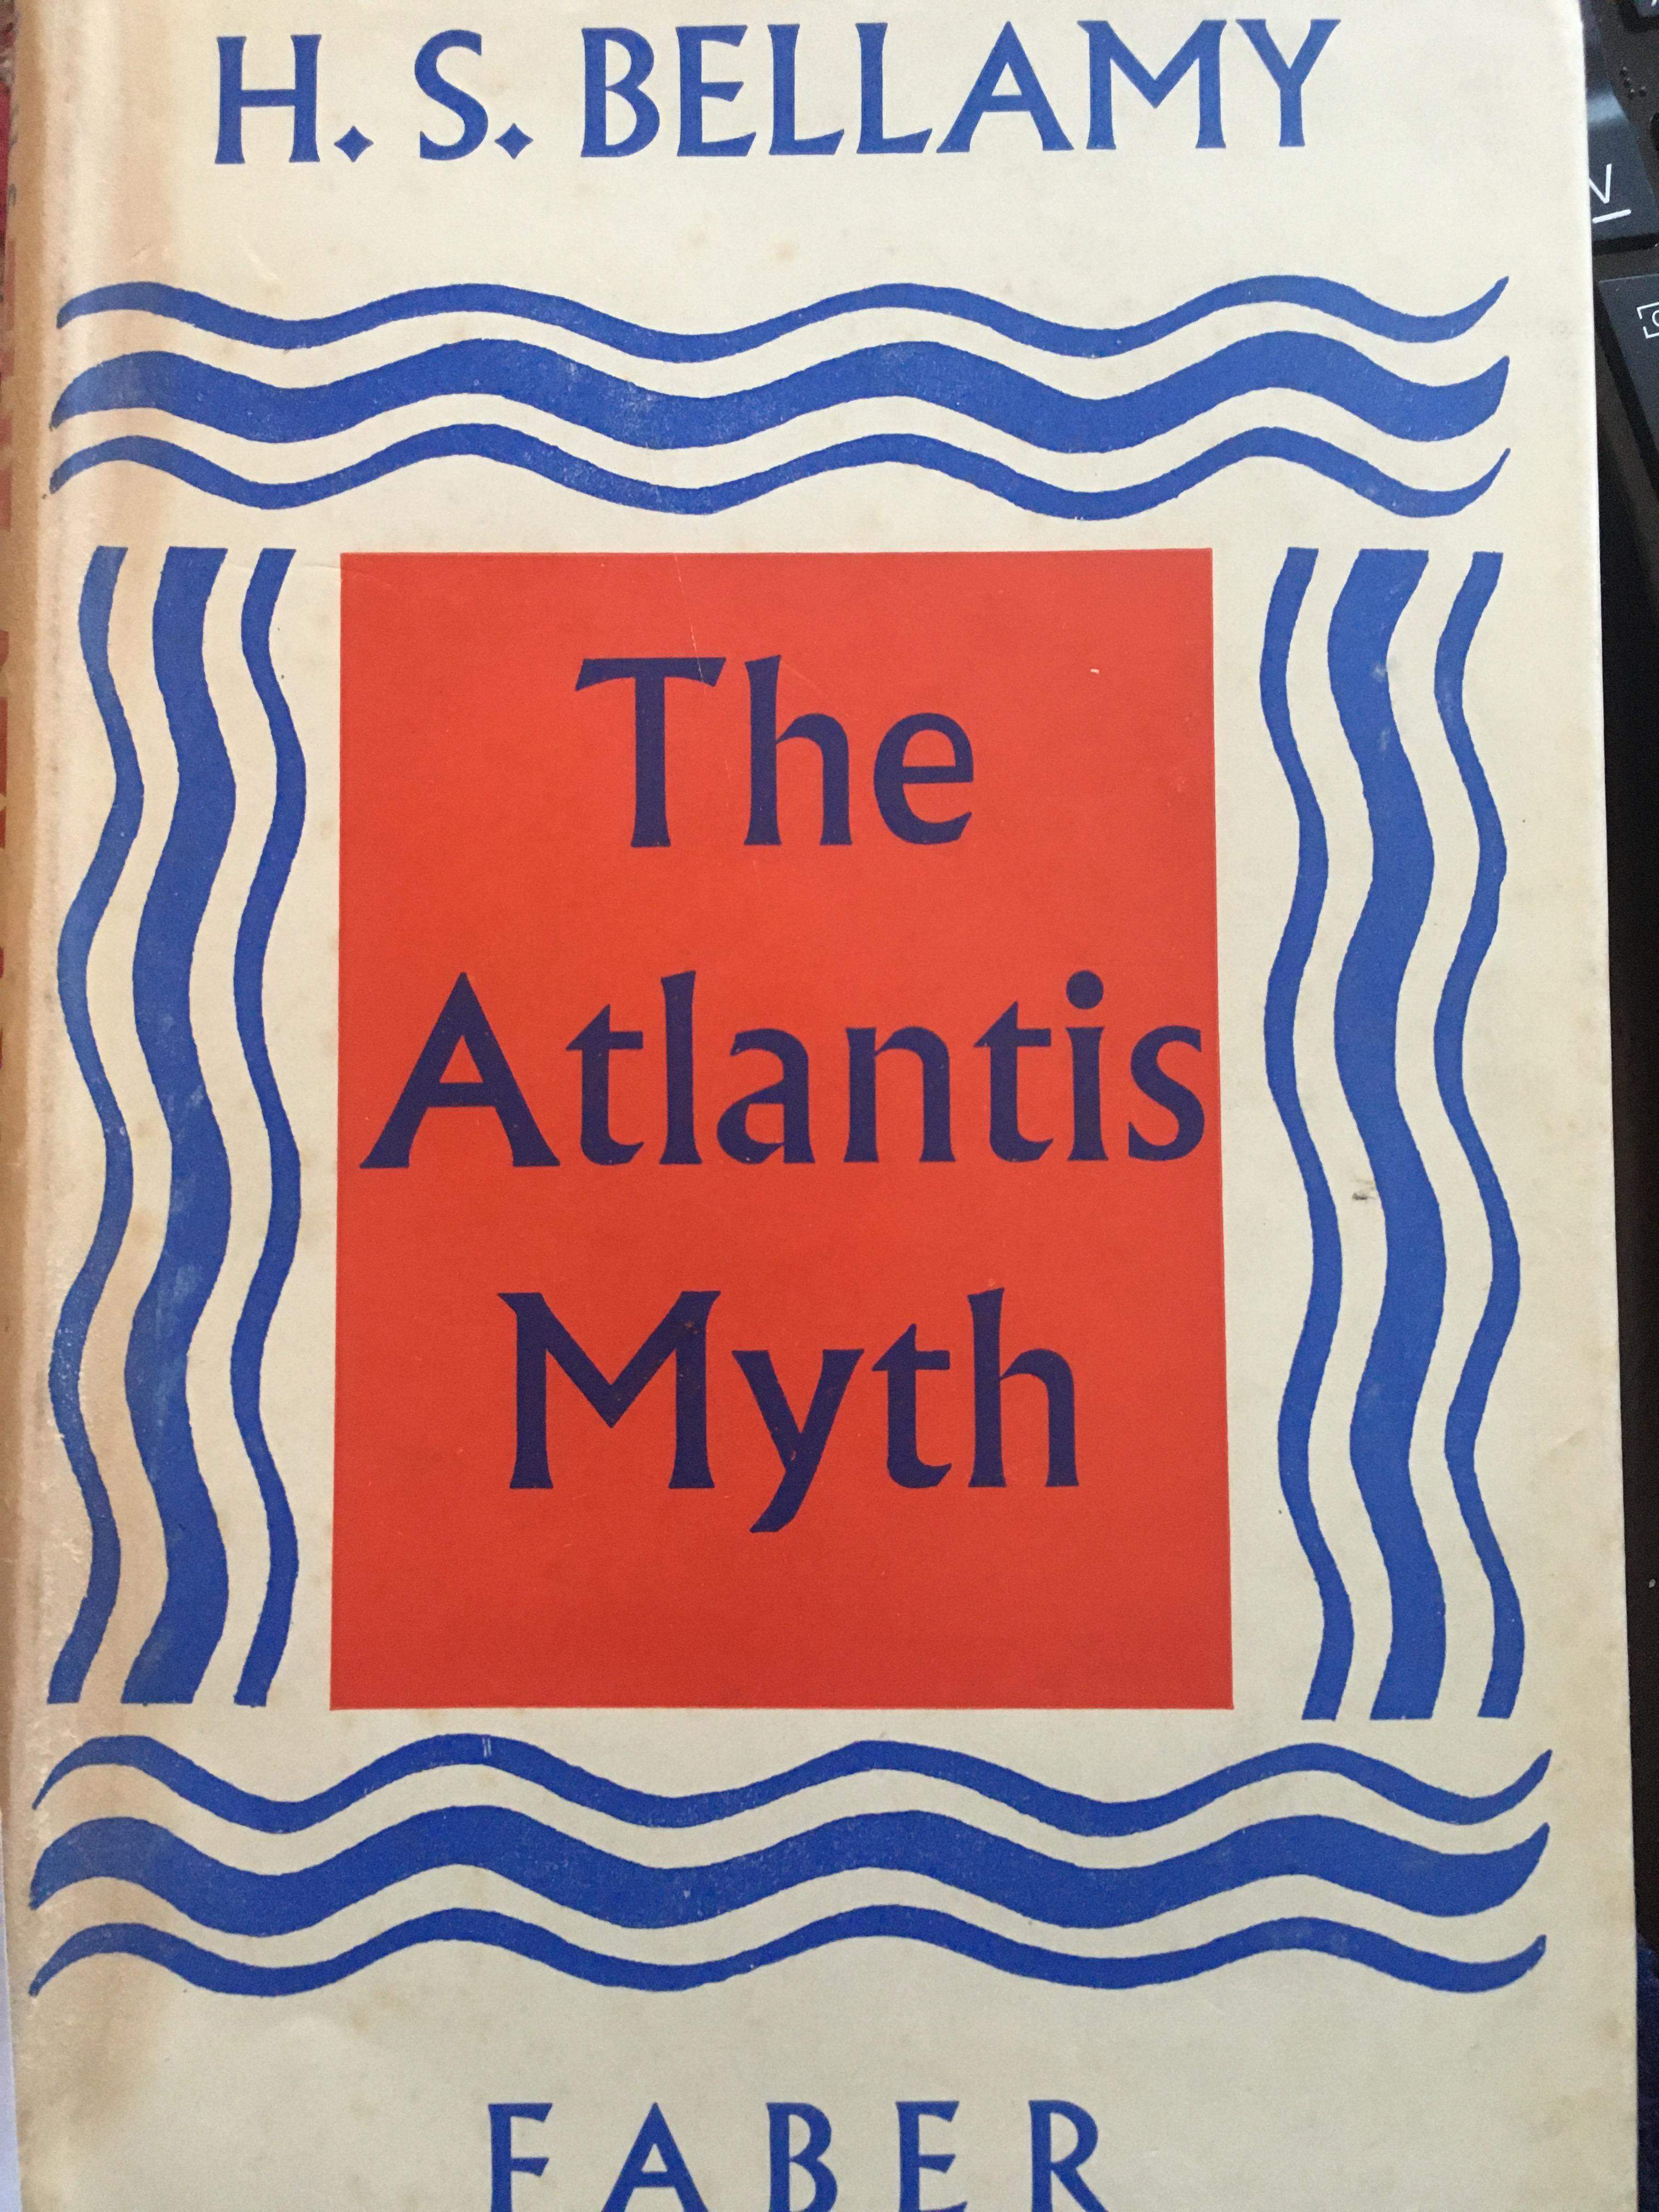 H.S Bellamy Bundle, A Life History of our Earth 1st edition & The Atlantis Myth 1st Ed